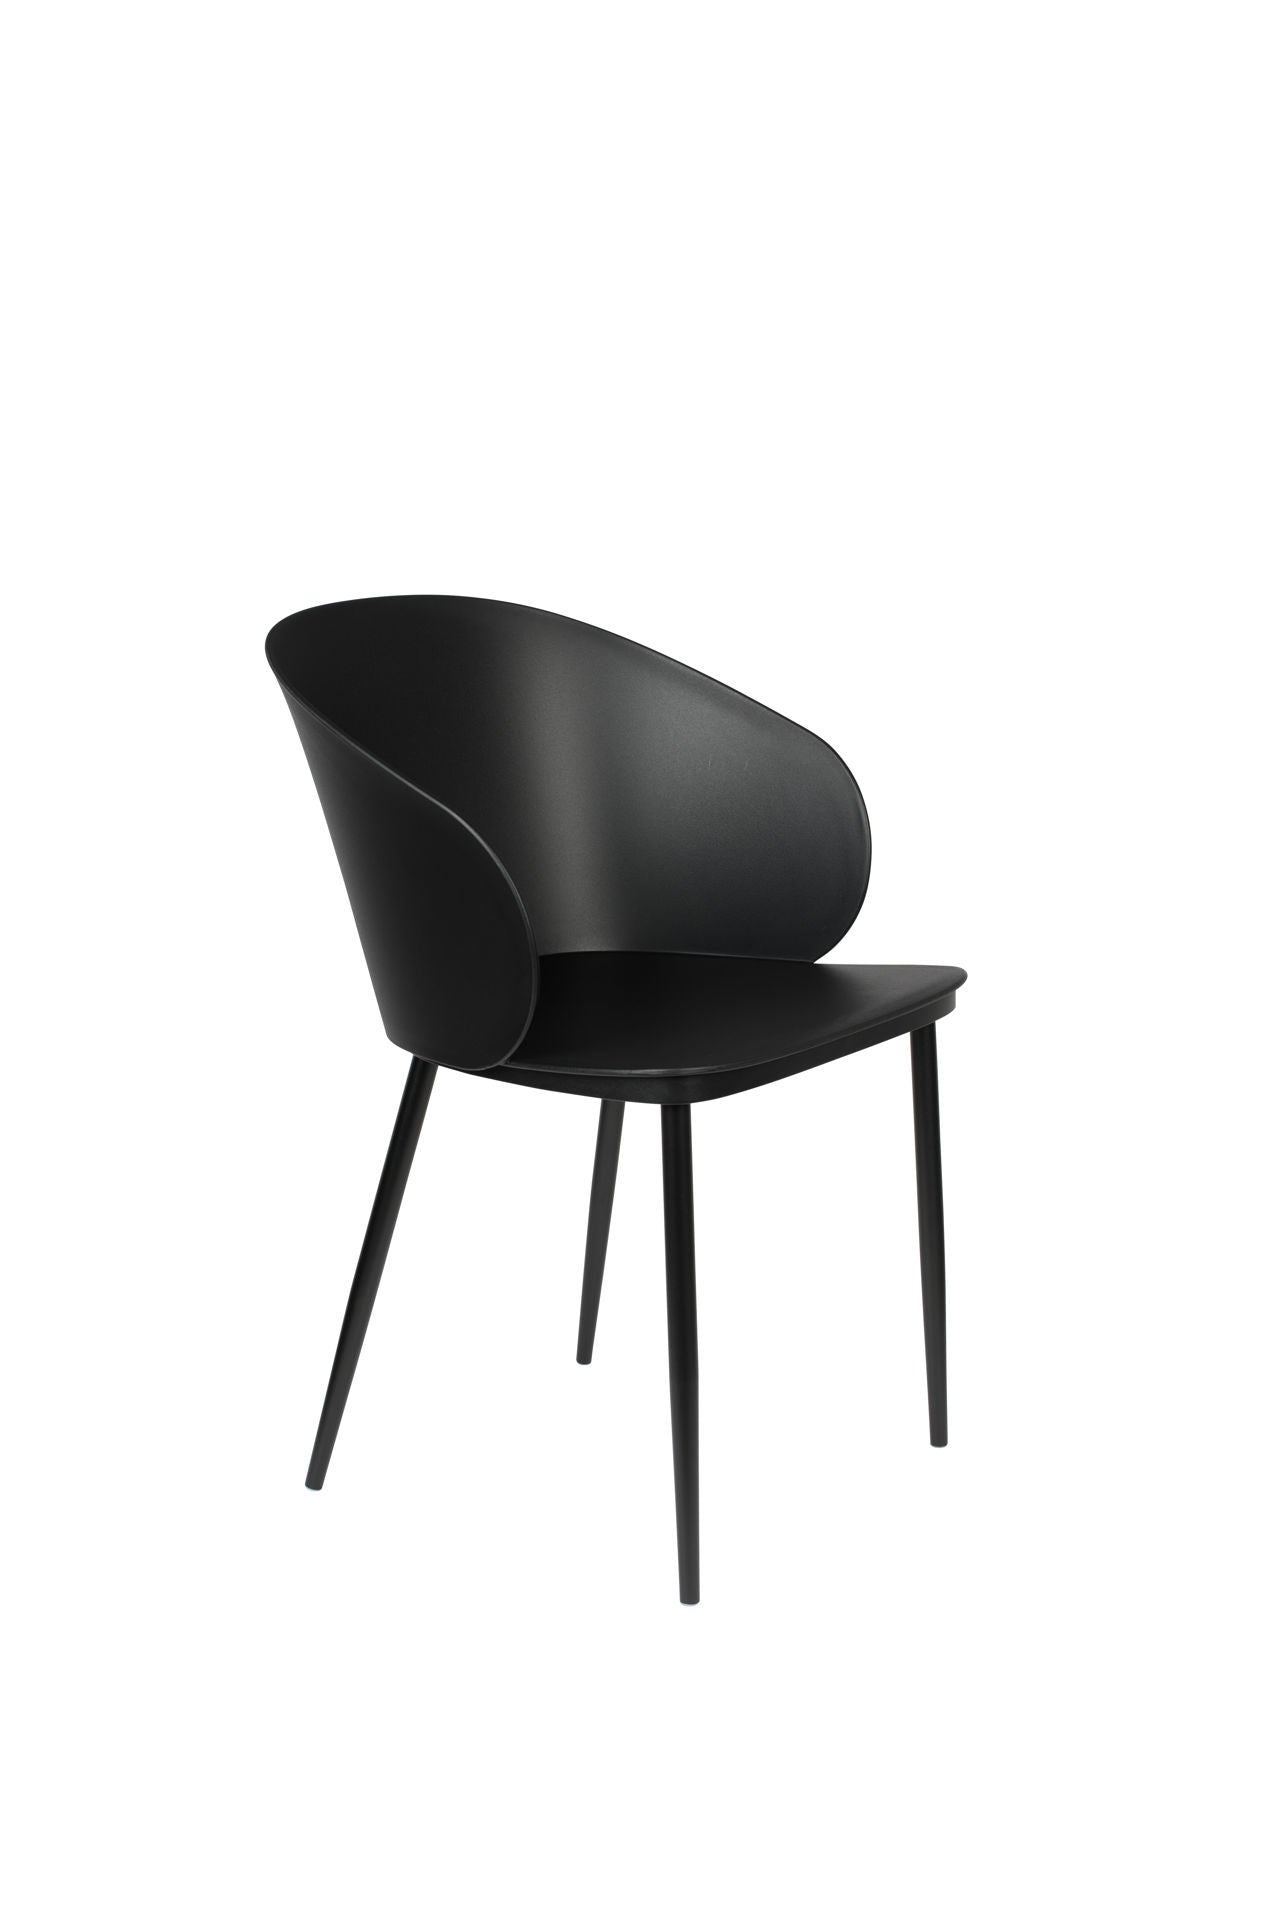 Nancy's Greenbriar Chair - Scandinave - Noir - Polypropylène, Acier - 53 cm x 57 cm x 81 cm